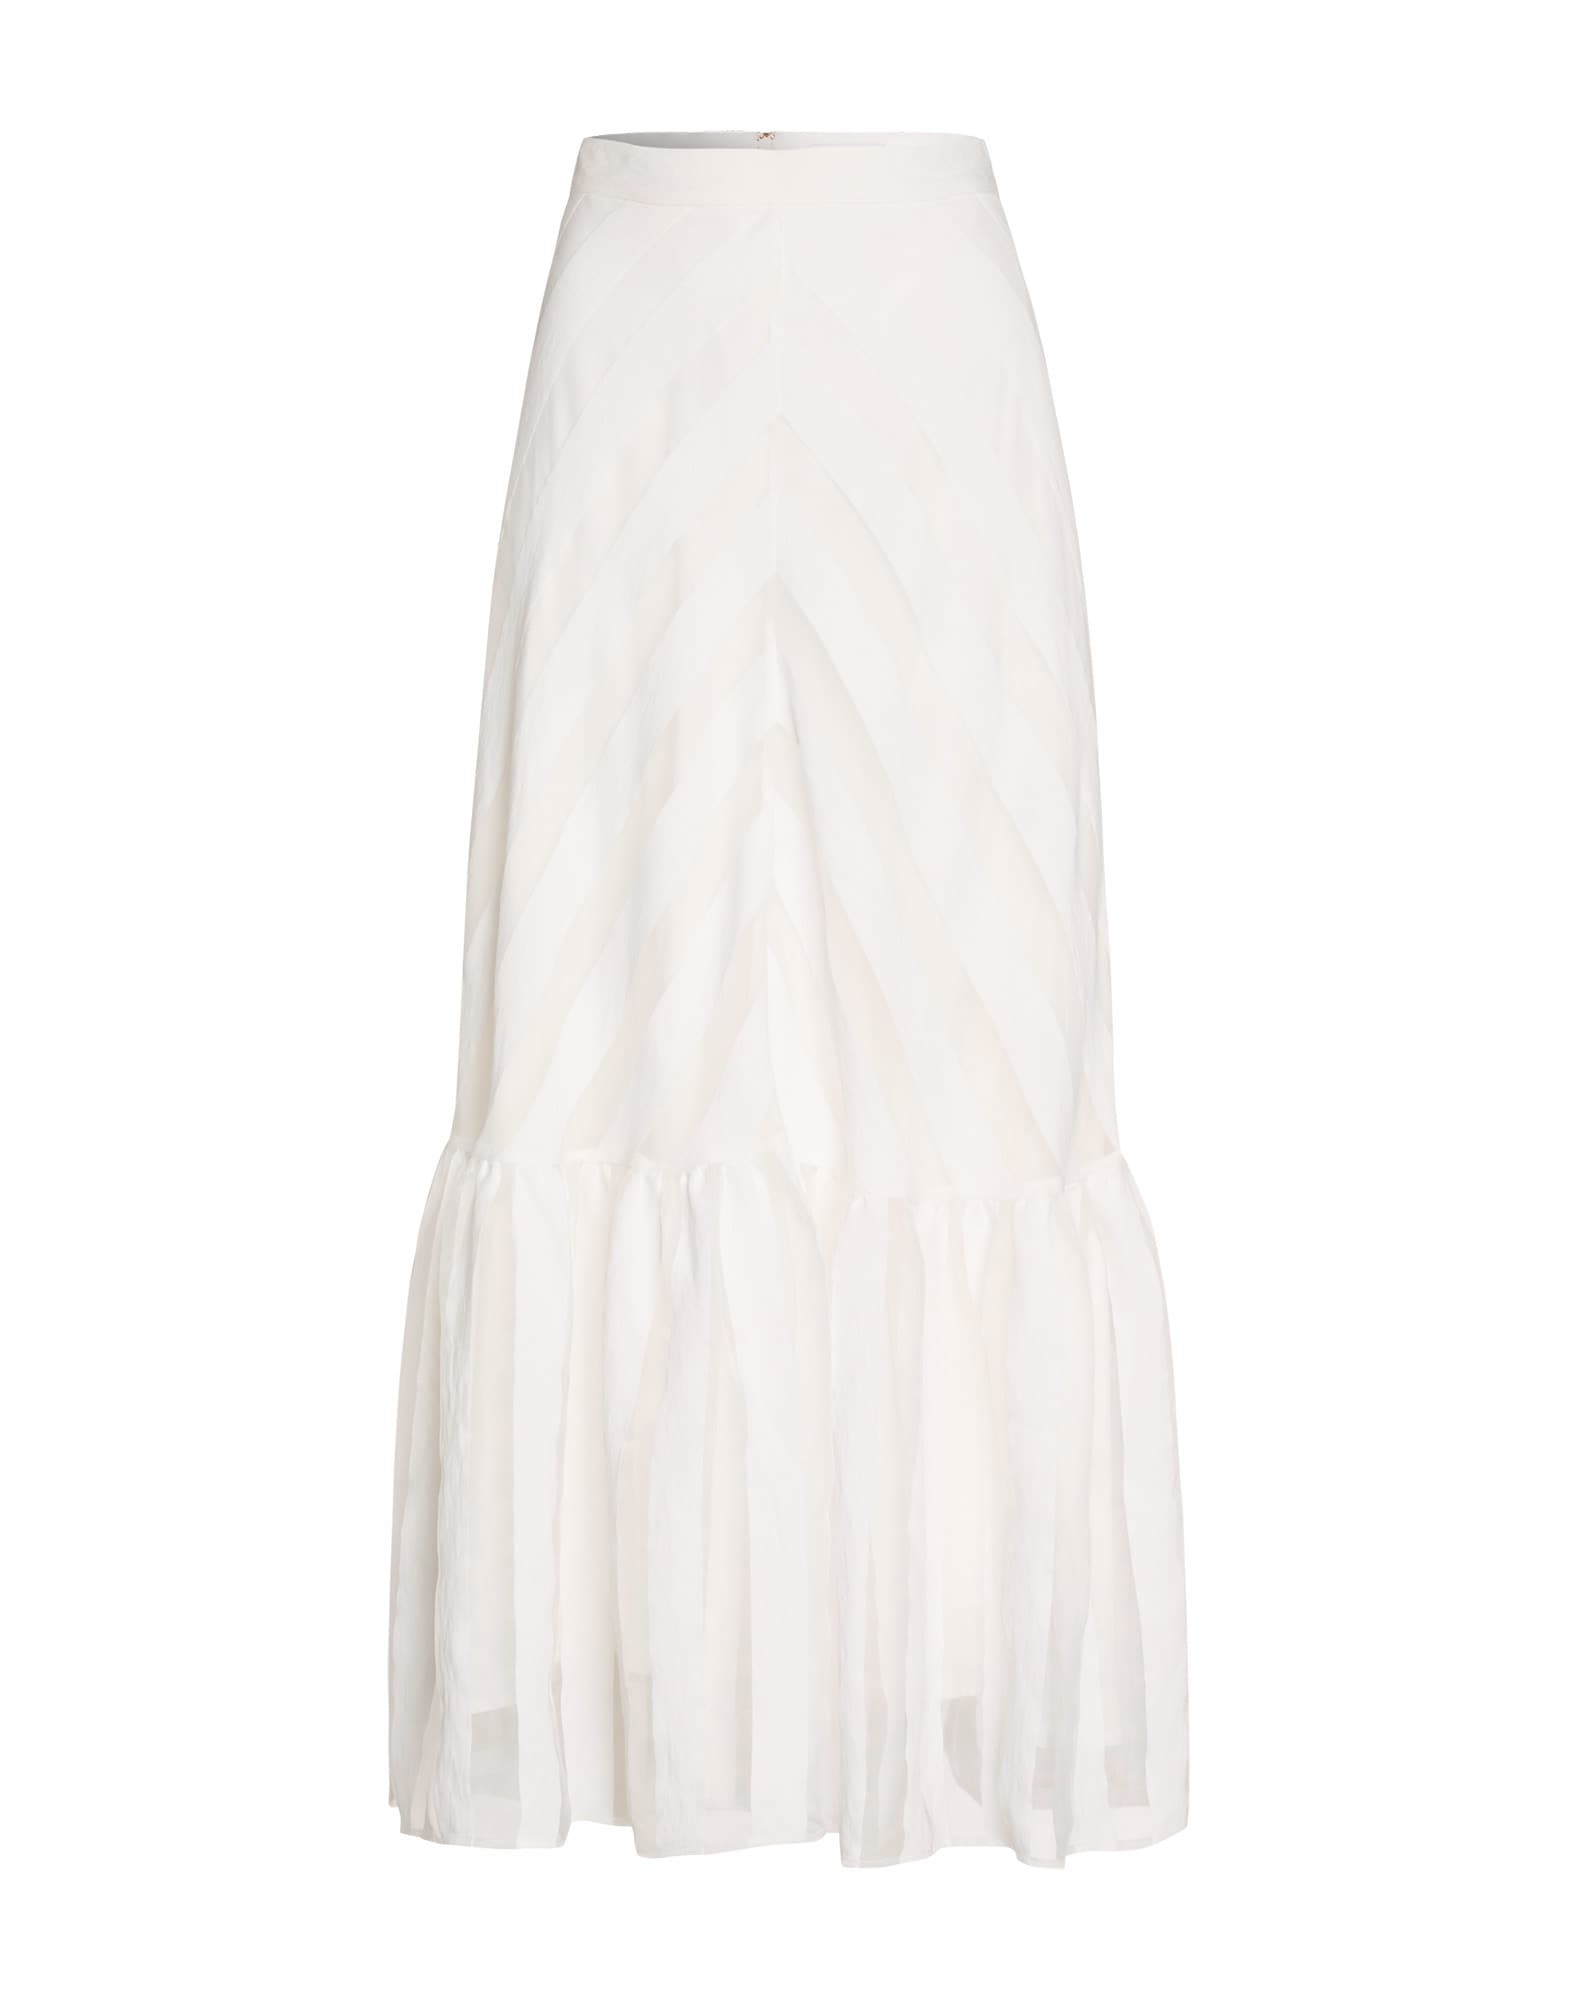 Sukňa biela prírodná biela IVY OAK